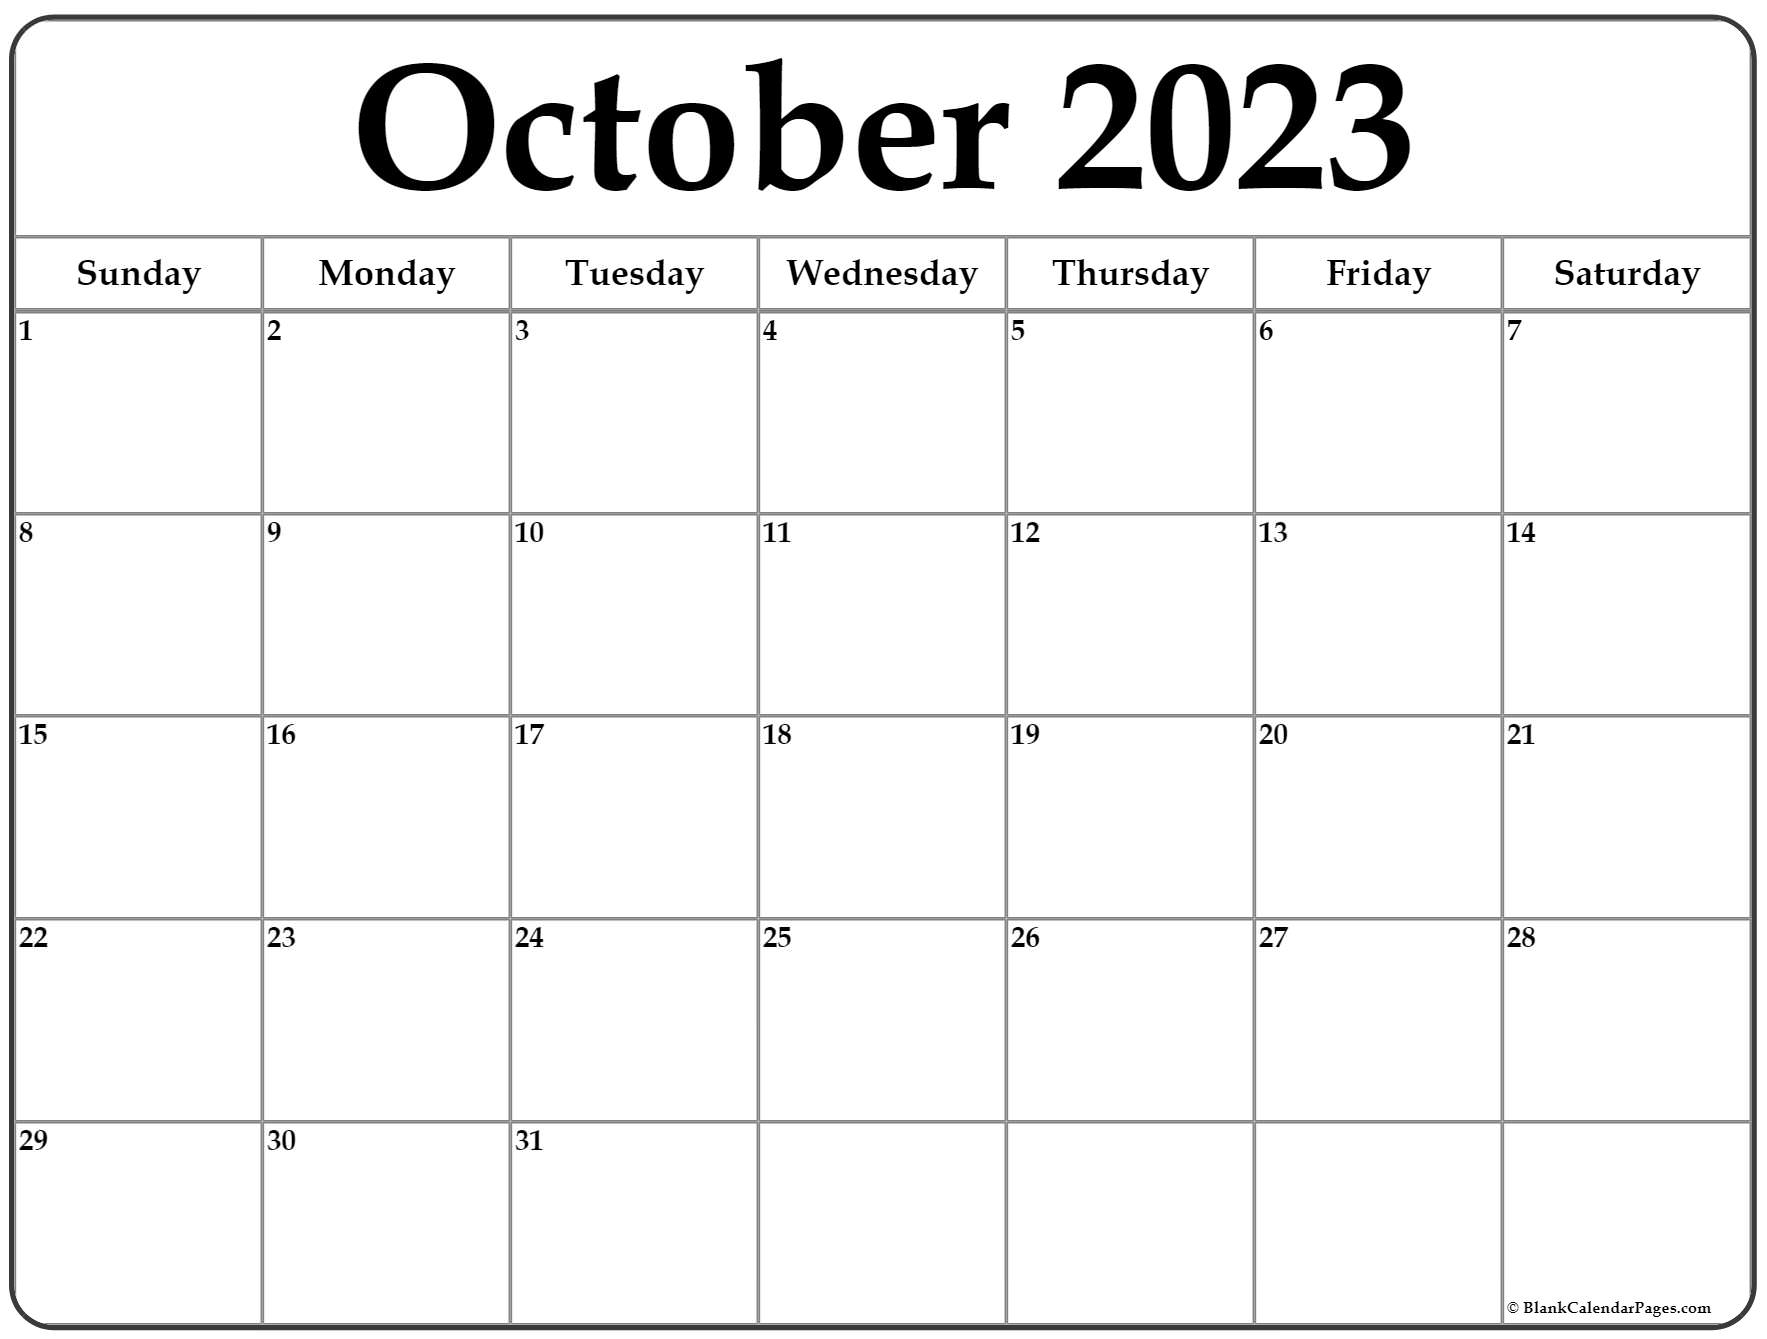 october-2023-calendar-printable-free-get-calendar-2023-update